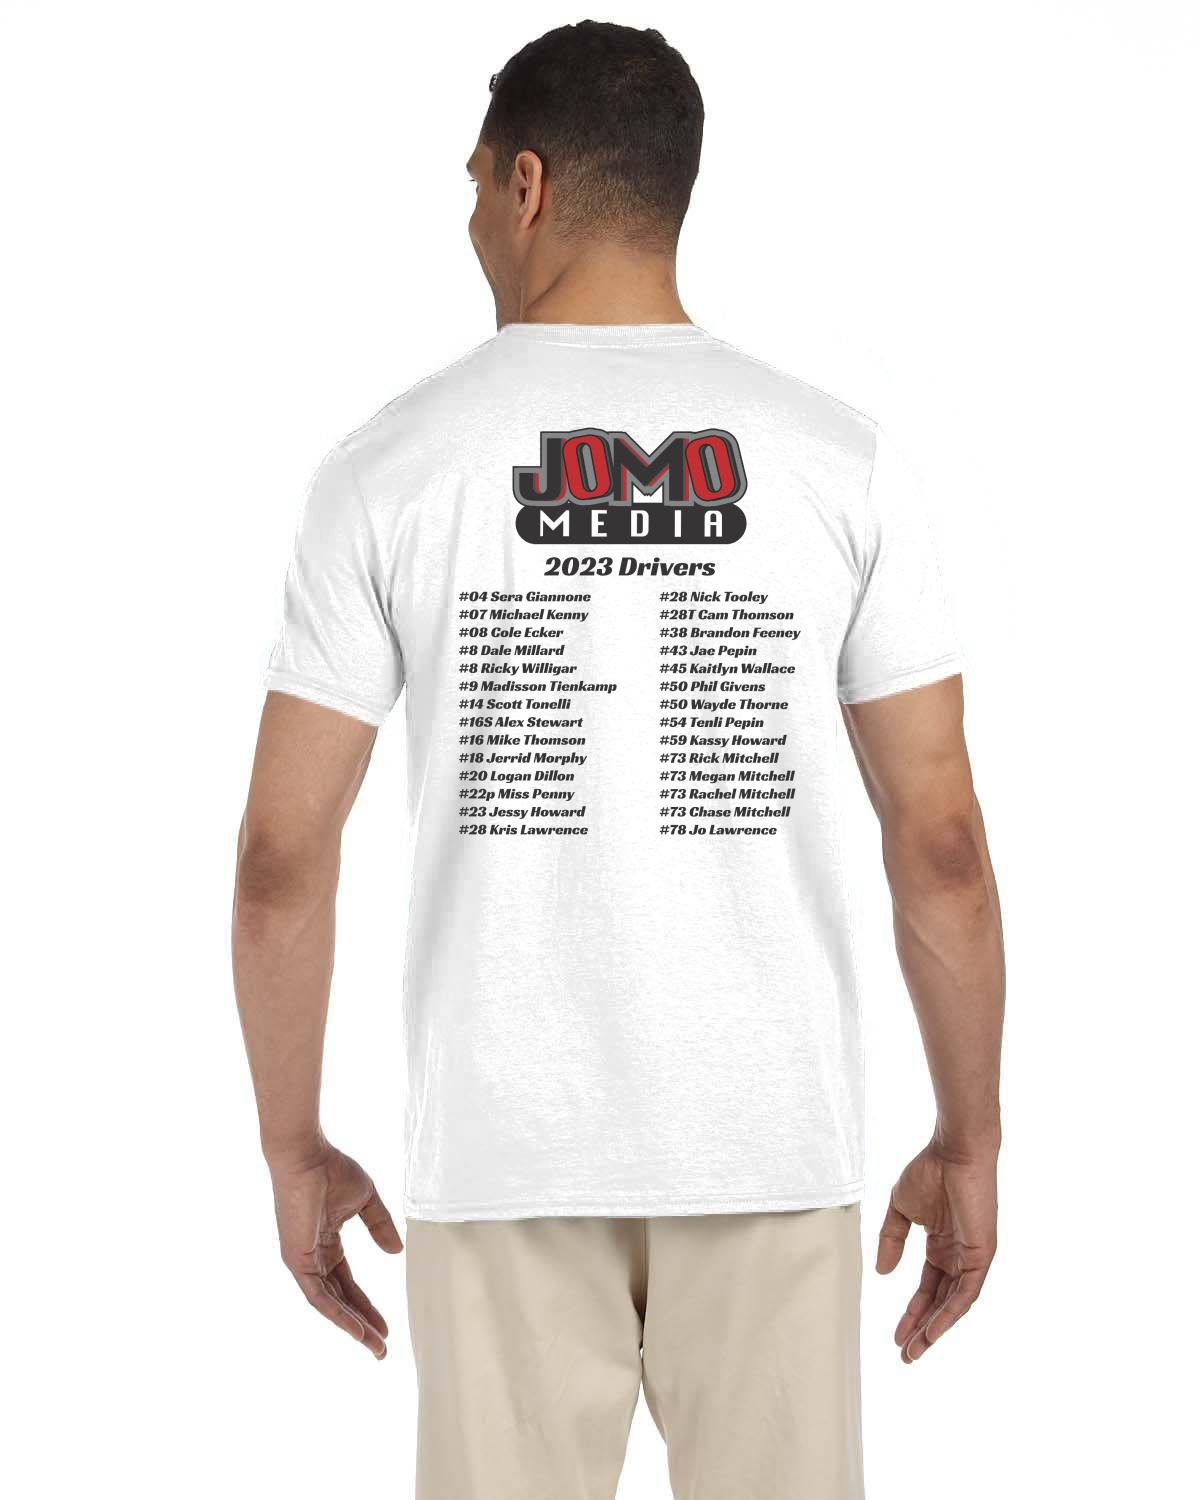 JOMO Media 2023 Drivers Men's SoftStyle tshirt